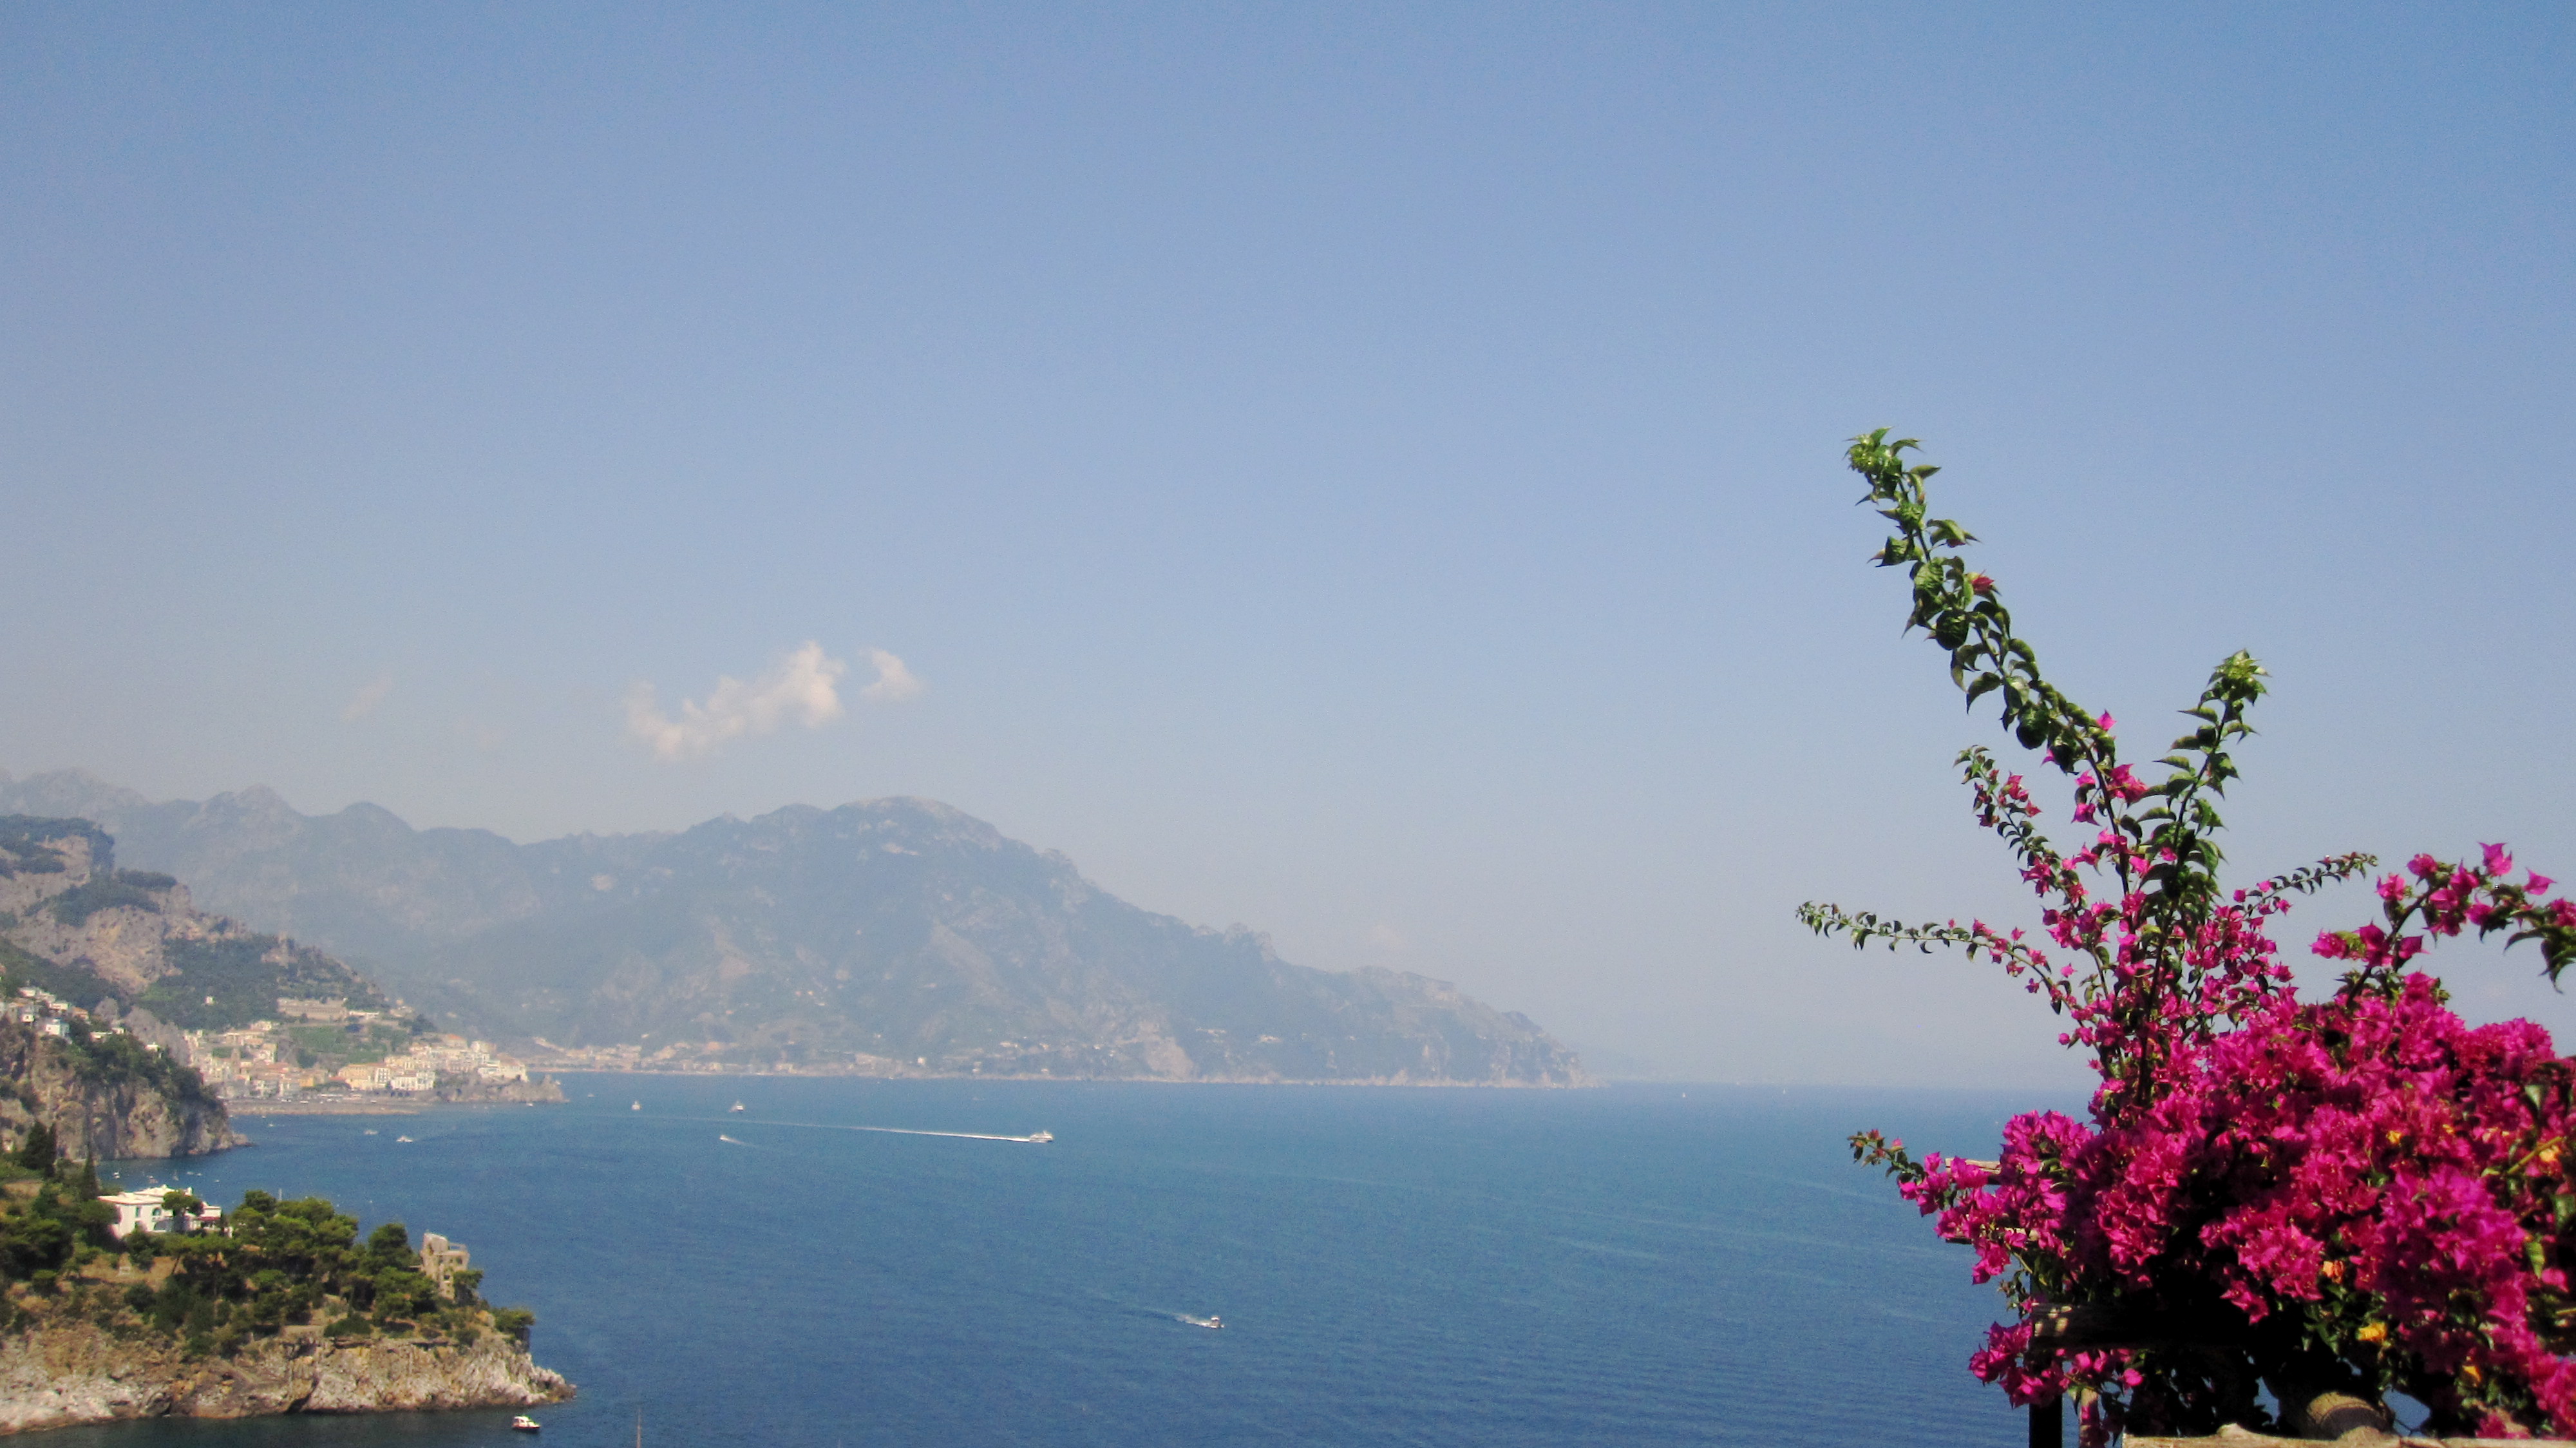 Sorrento, Amalfi, bus ride amalfi coast